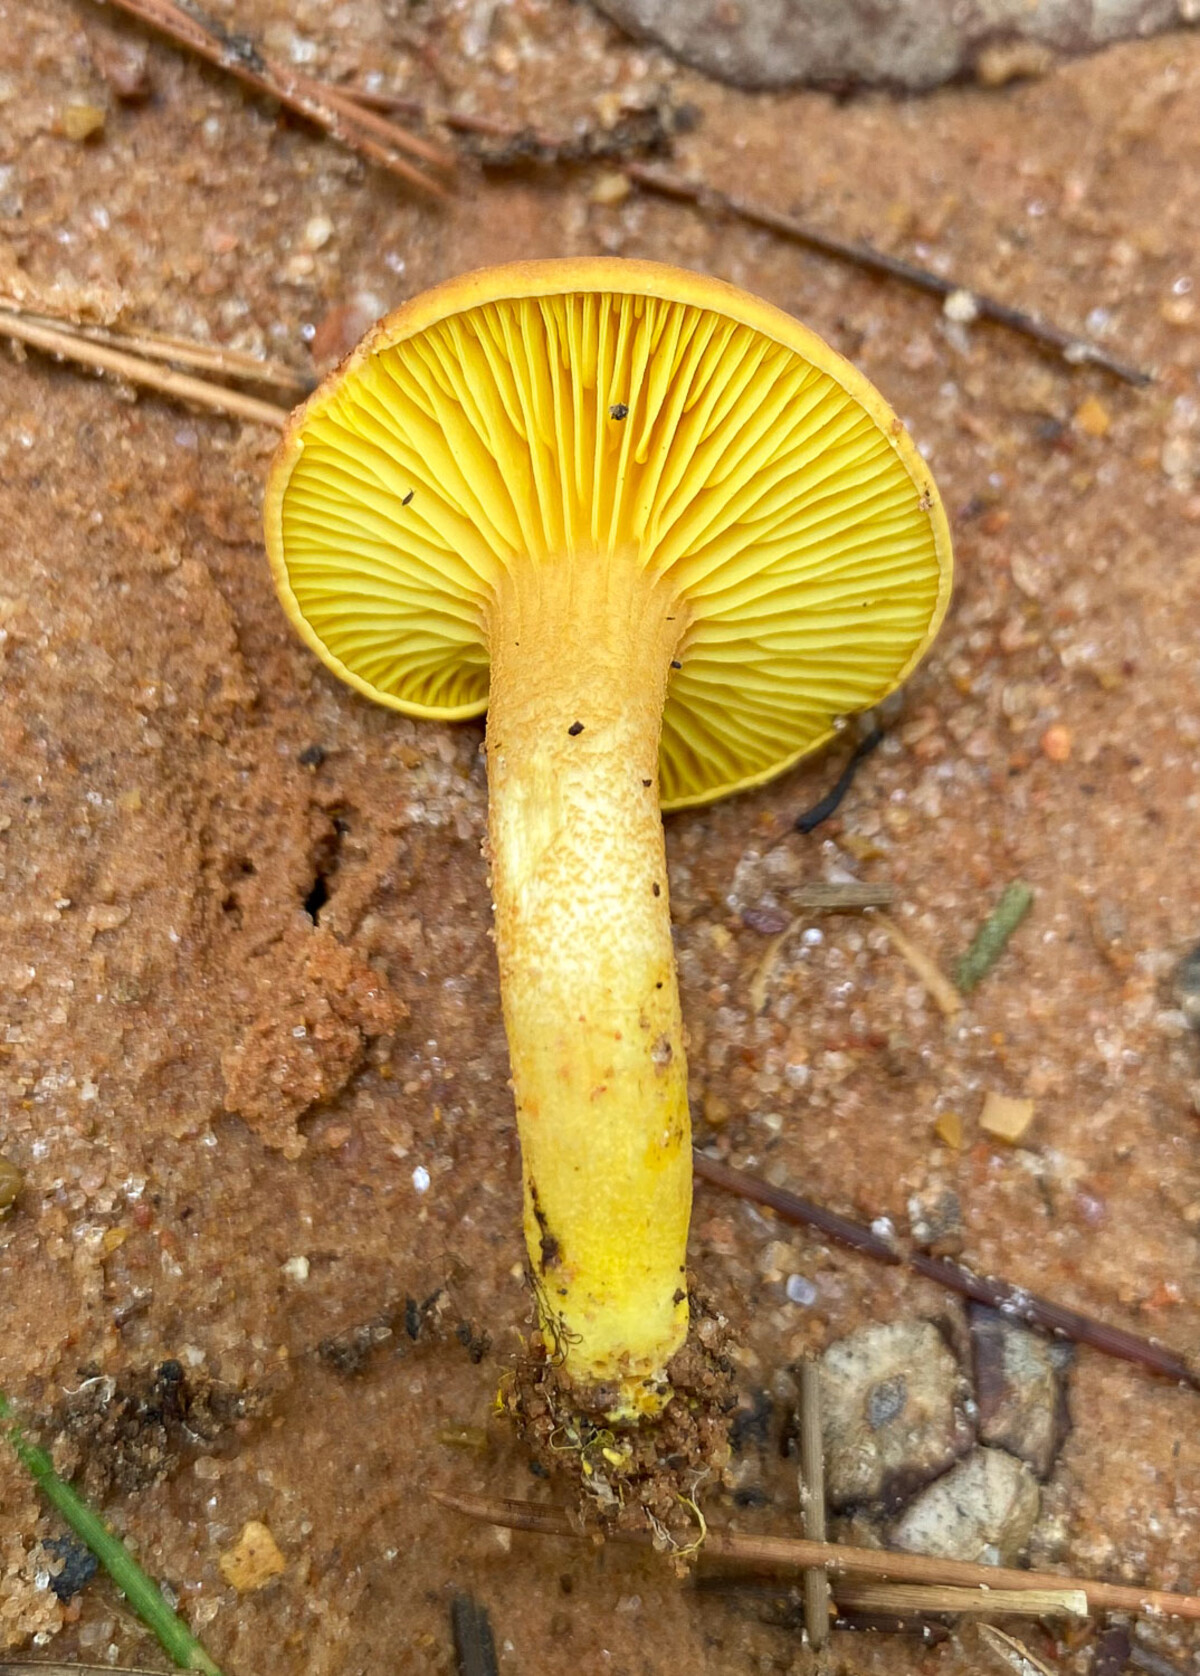 Phylloporus image